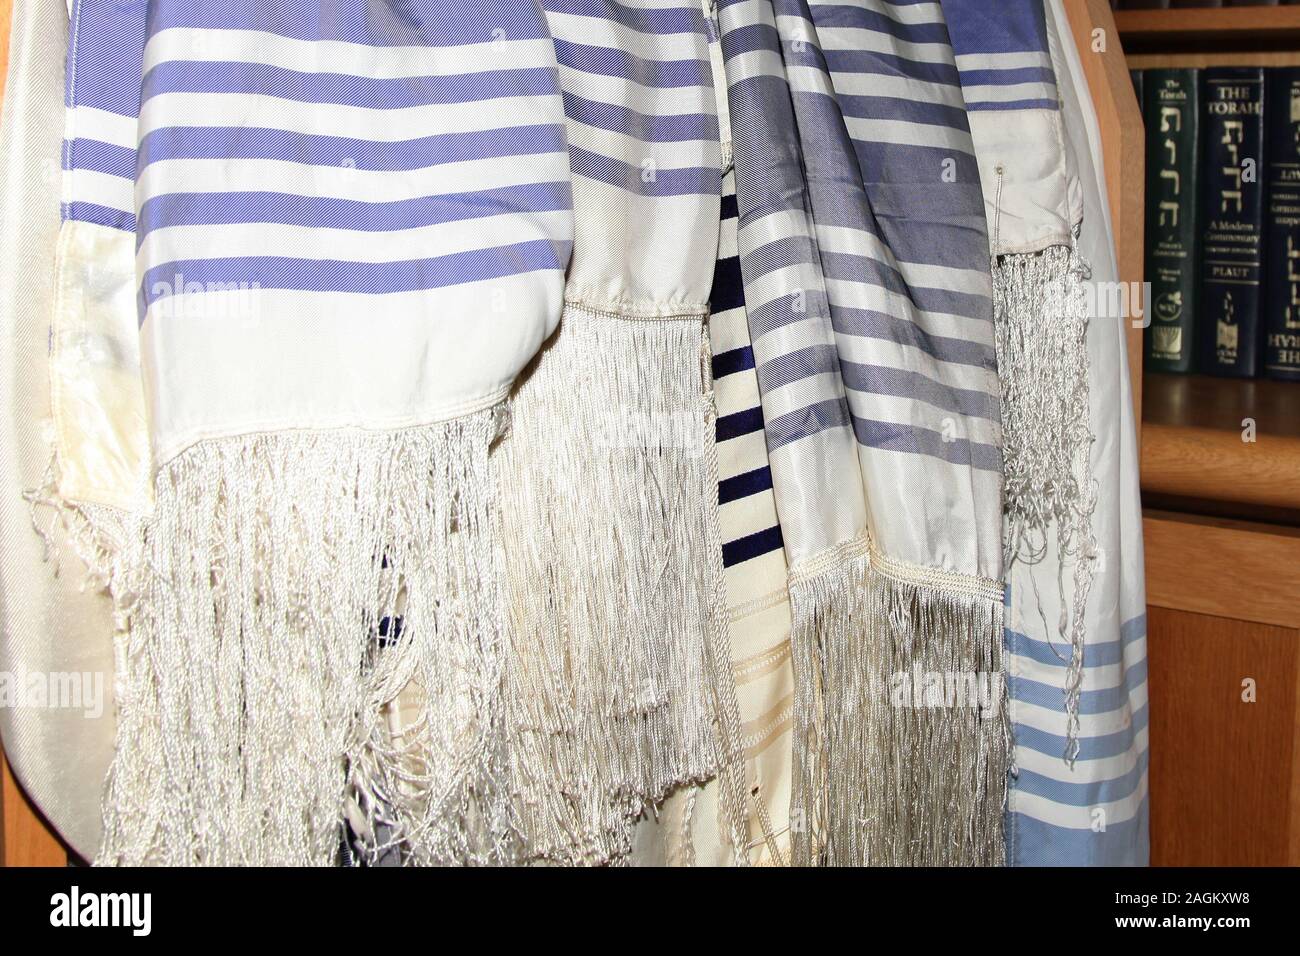 Jewish prayer shawls 'Tallit' hanging at entrance of Synagogue, ready for use Stock Photo